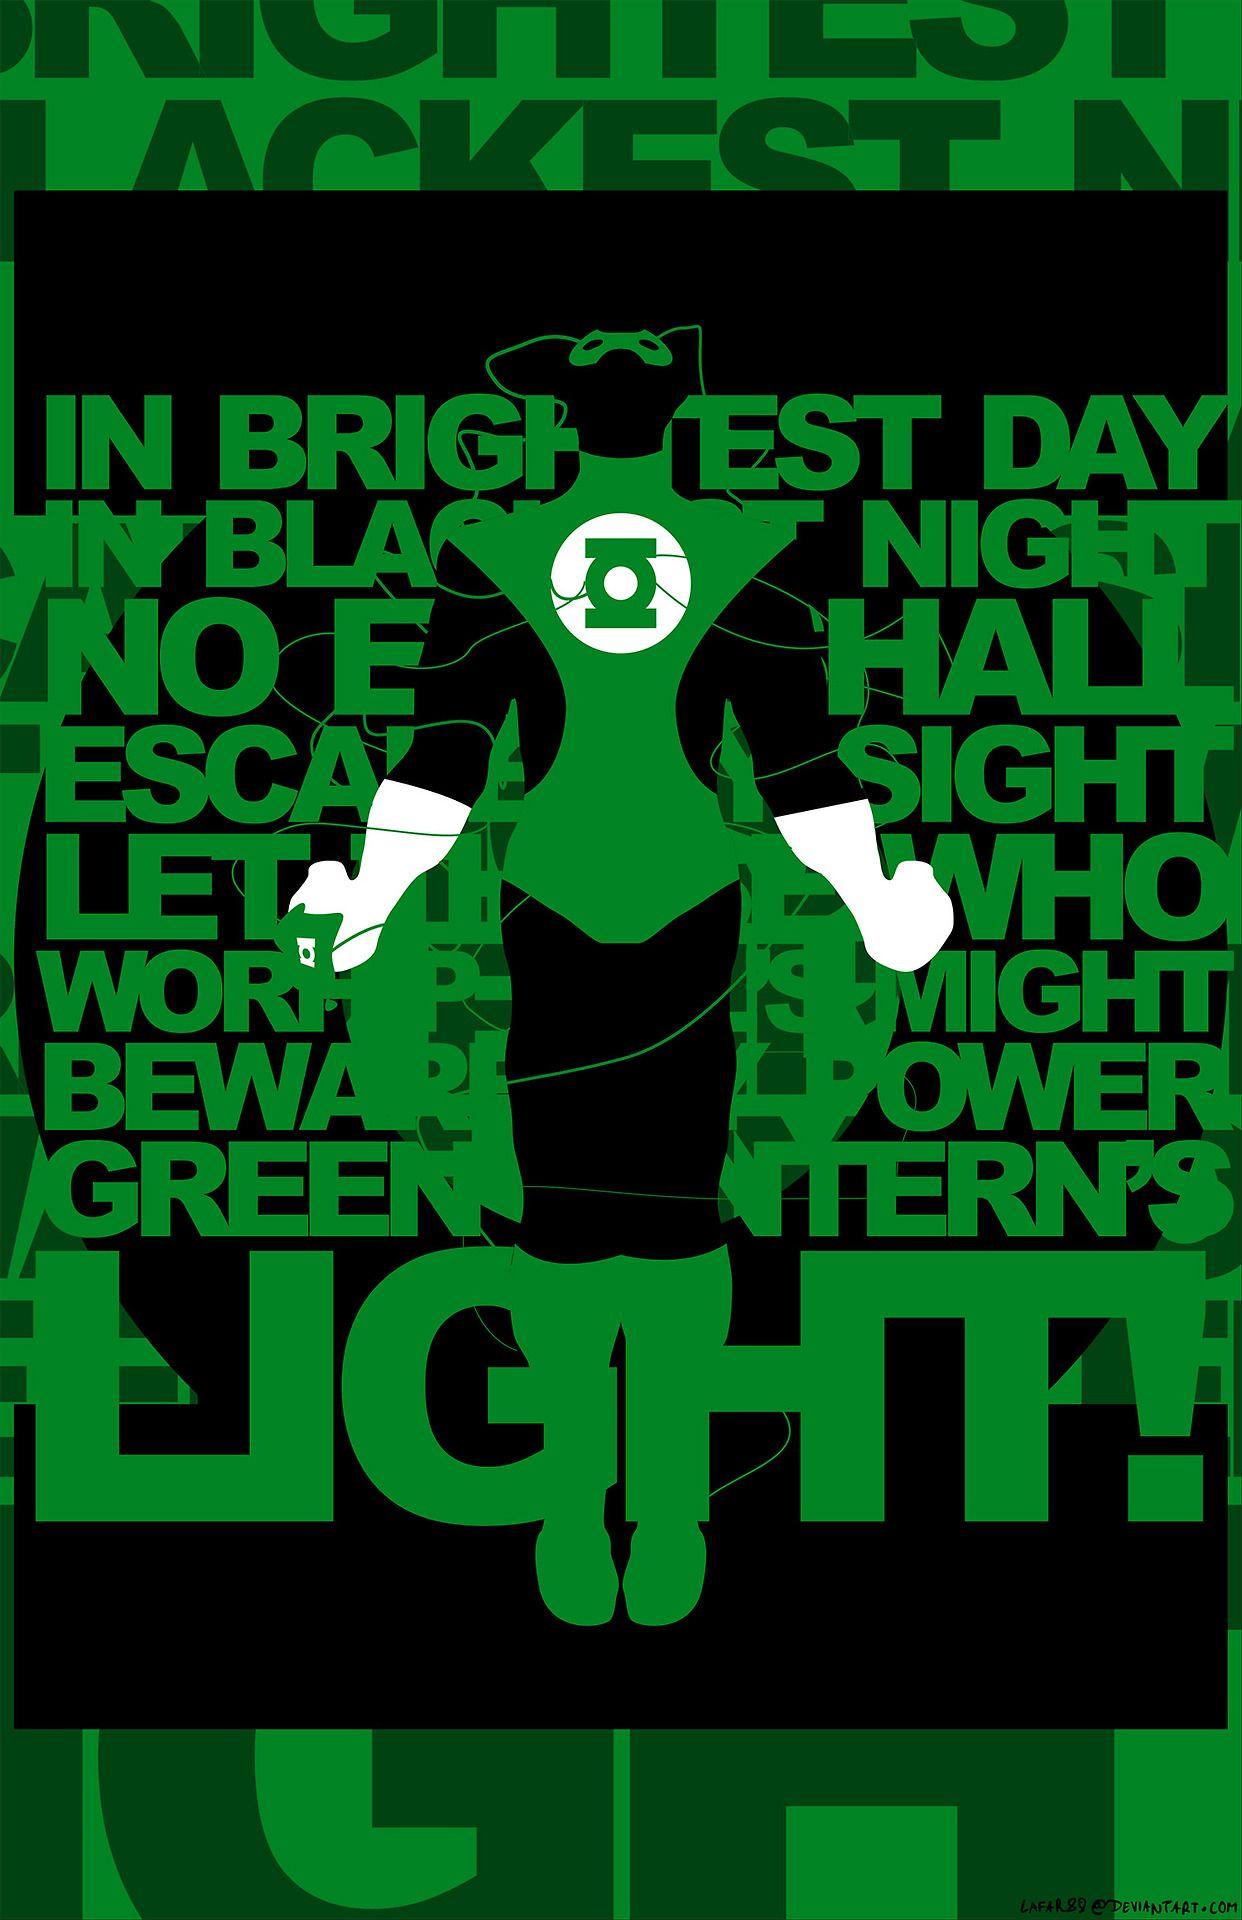 variations of green lantern oath